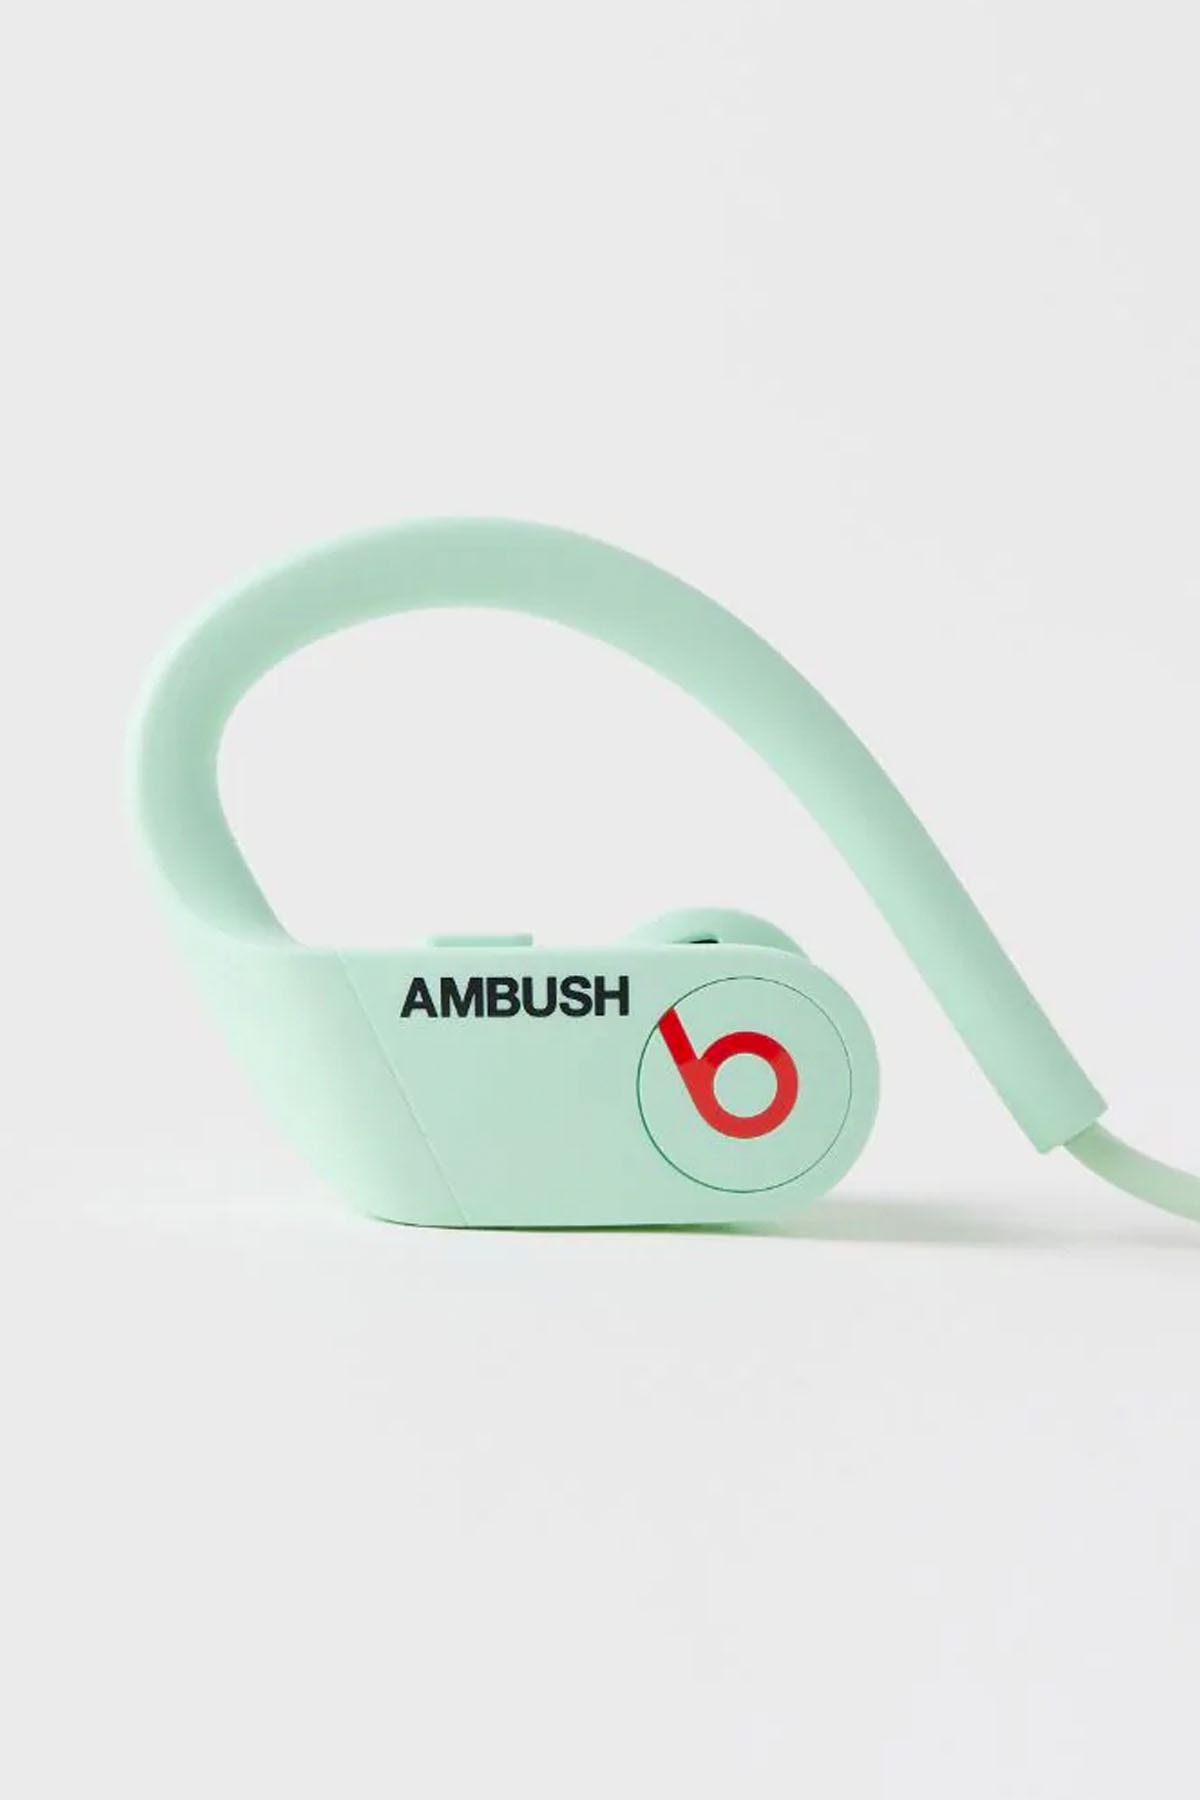 AMBUSH x Beats Powerbeats 全新聯乘無線耳機正式發佈